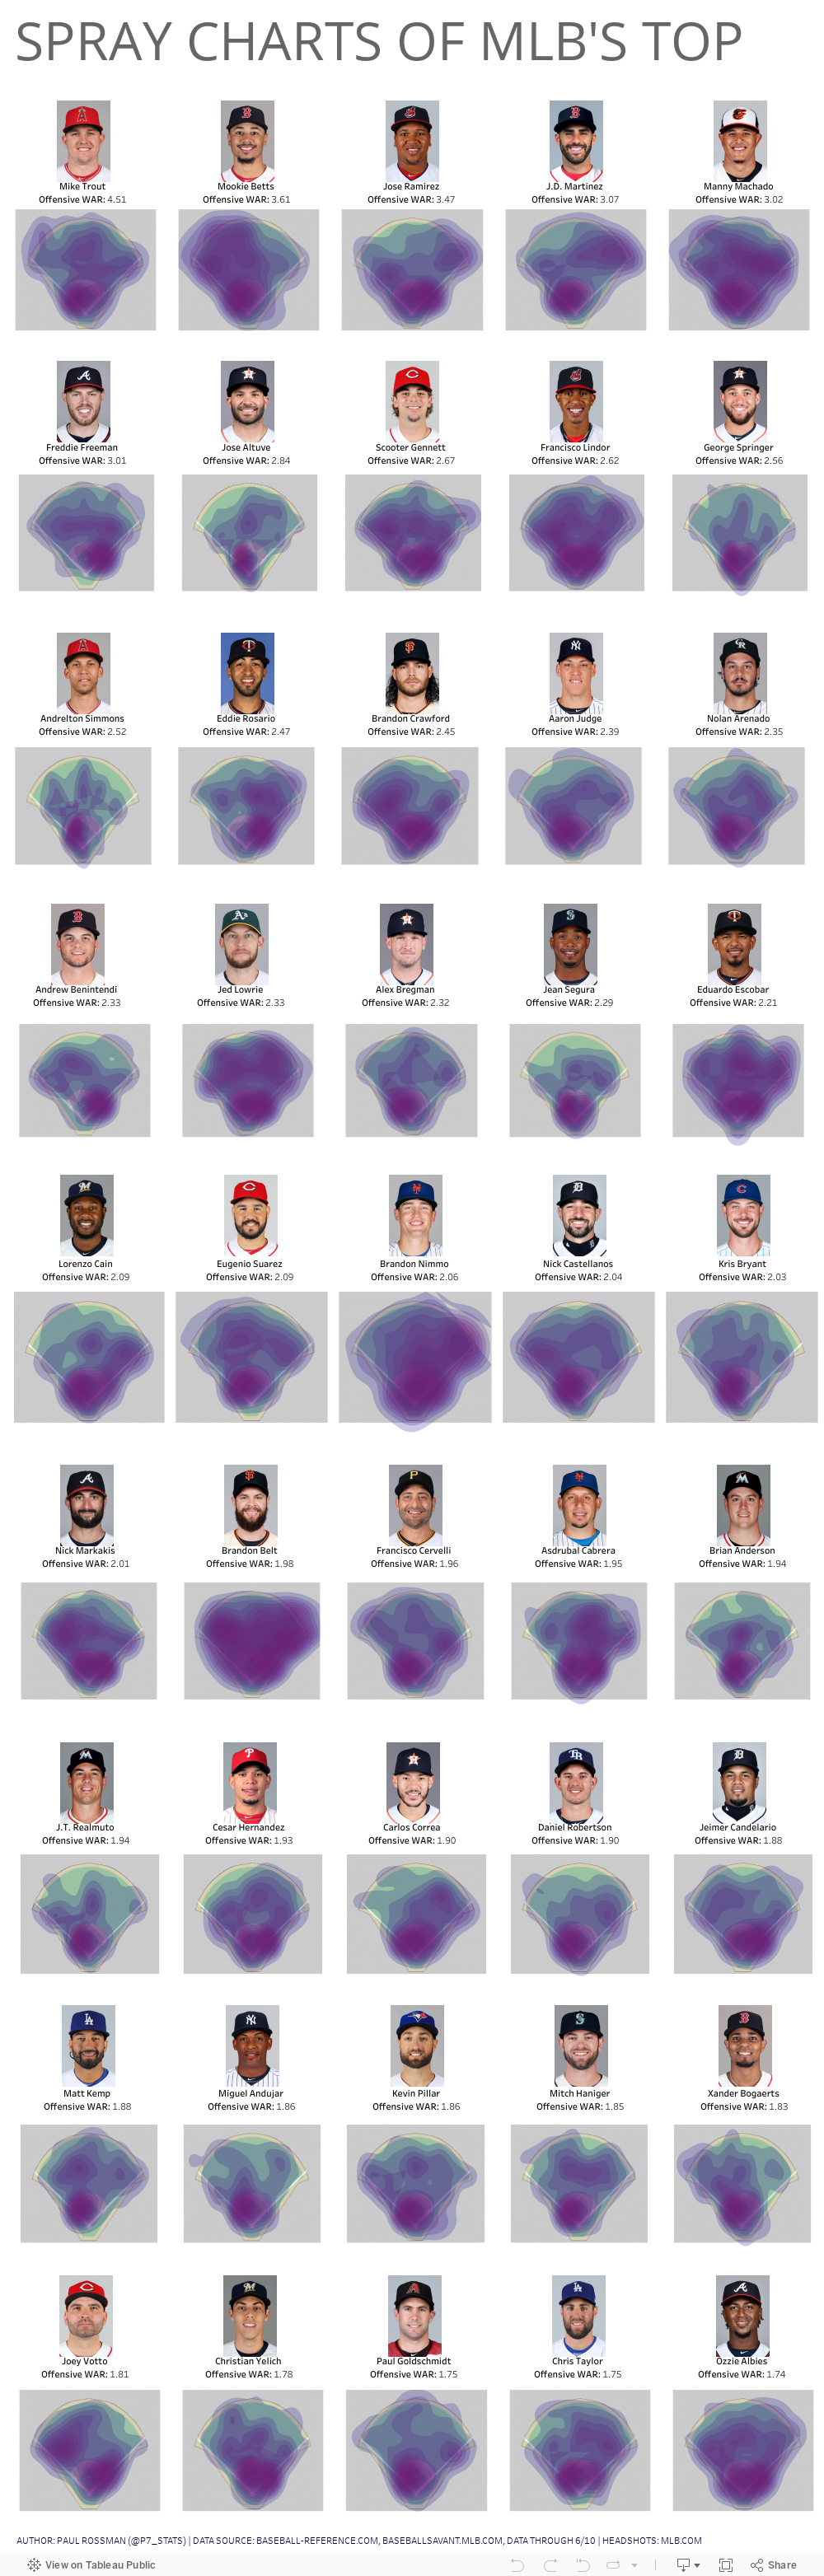 Spray Charts of MLBs Top Hitters 